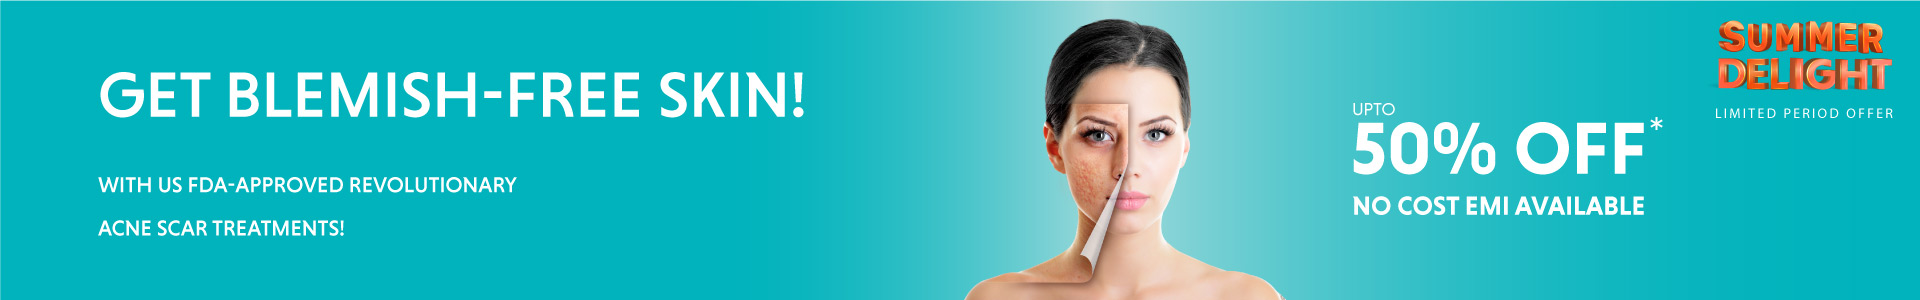 acne scar treatment banner